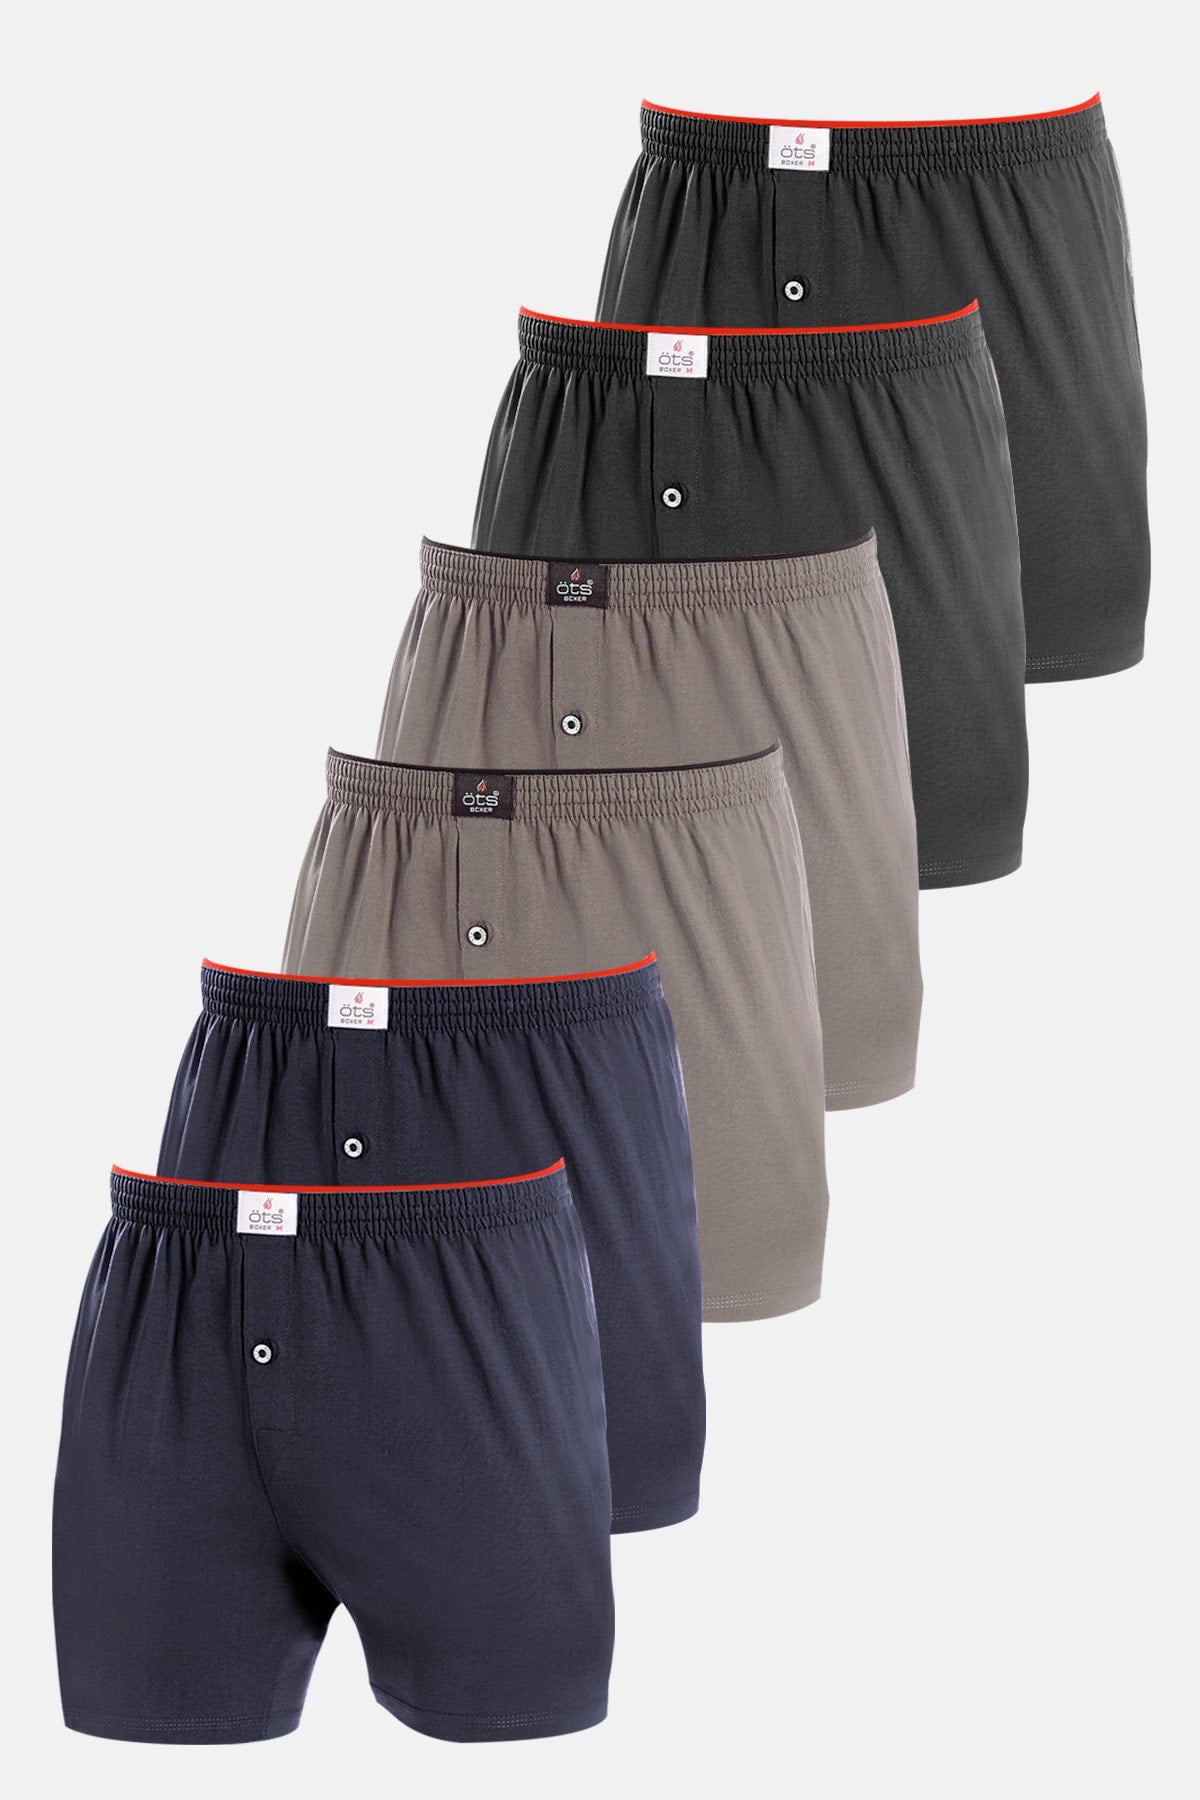 Men's Colored 6 Pieces Single Jersey Boxer Dark (100% Cotton)